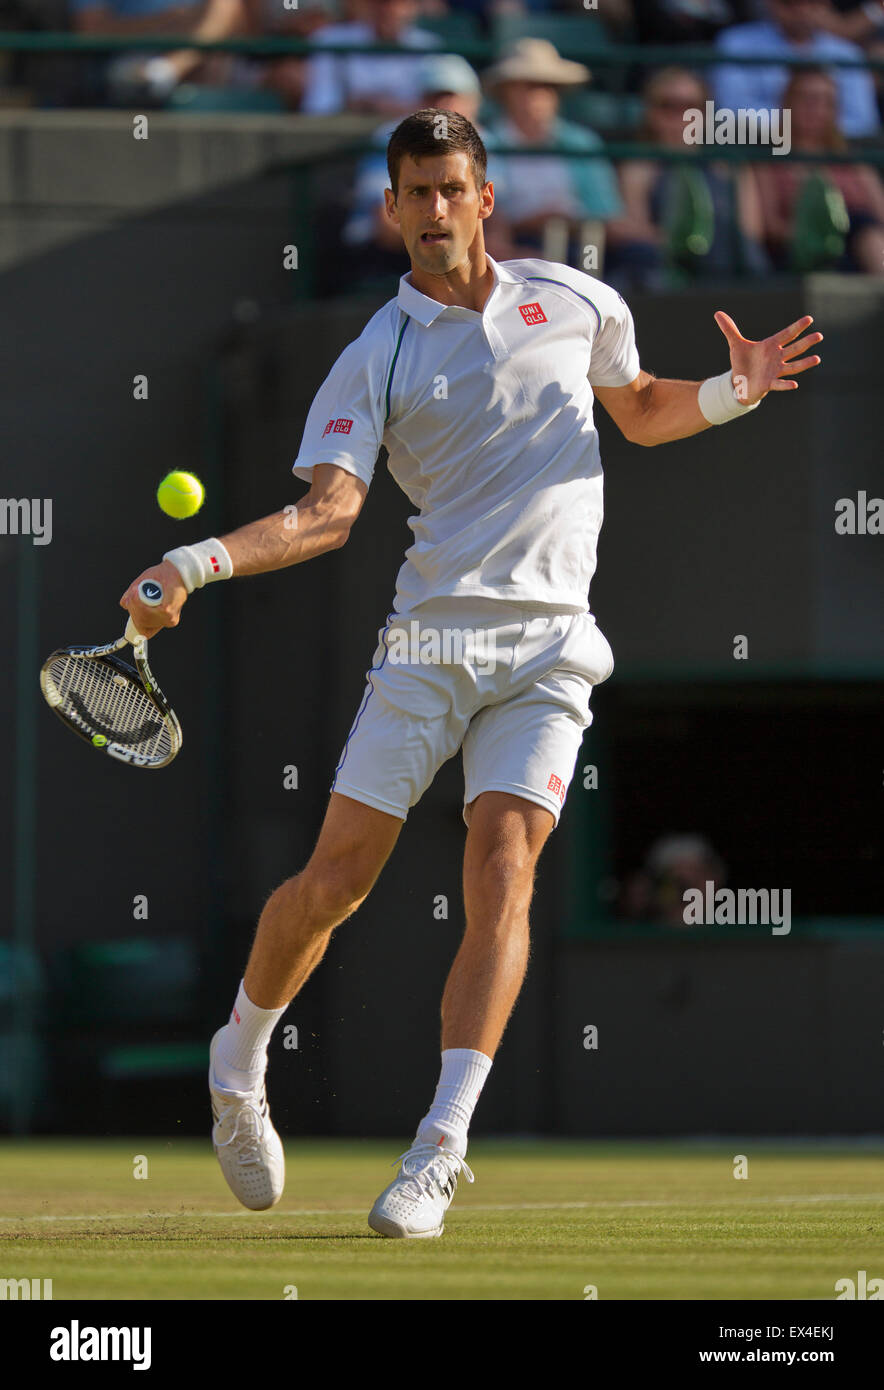 Wimbledon, Londres, Reino Unido. 6 de julio de 2015. Tenis, Wimbledon, Novak Djokovic (SRB) en su partido contra Kevin Anderson (RSA) Credit: Henk Koster/Alamy Live News Foto de stock